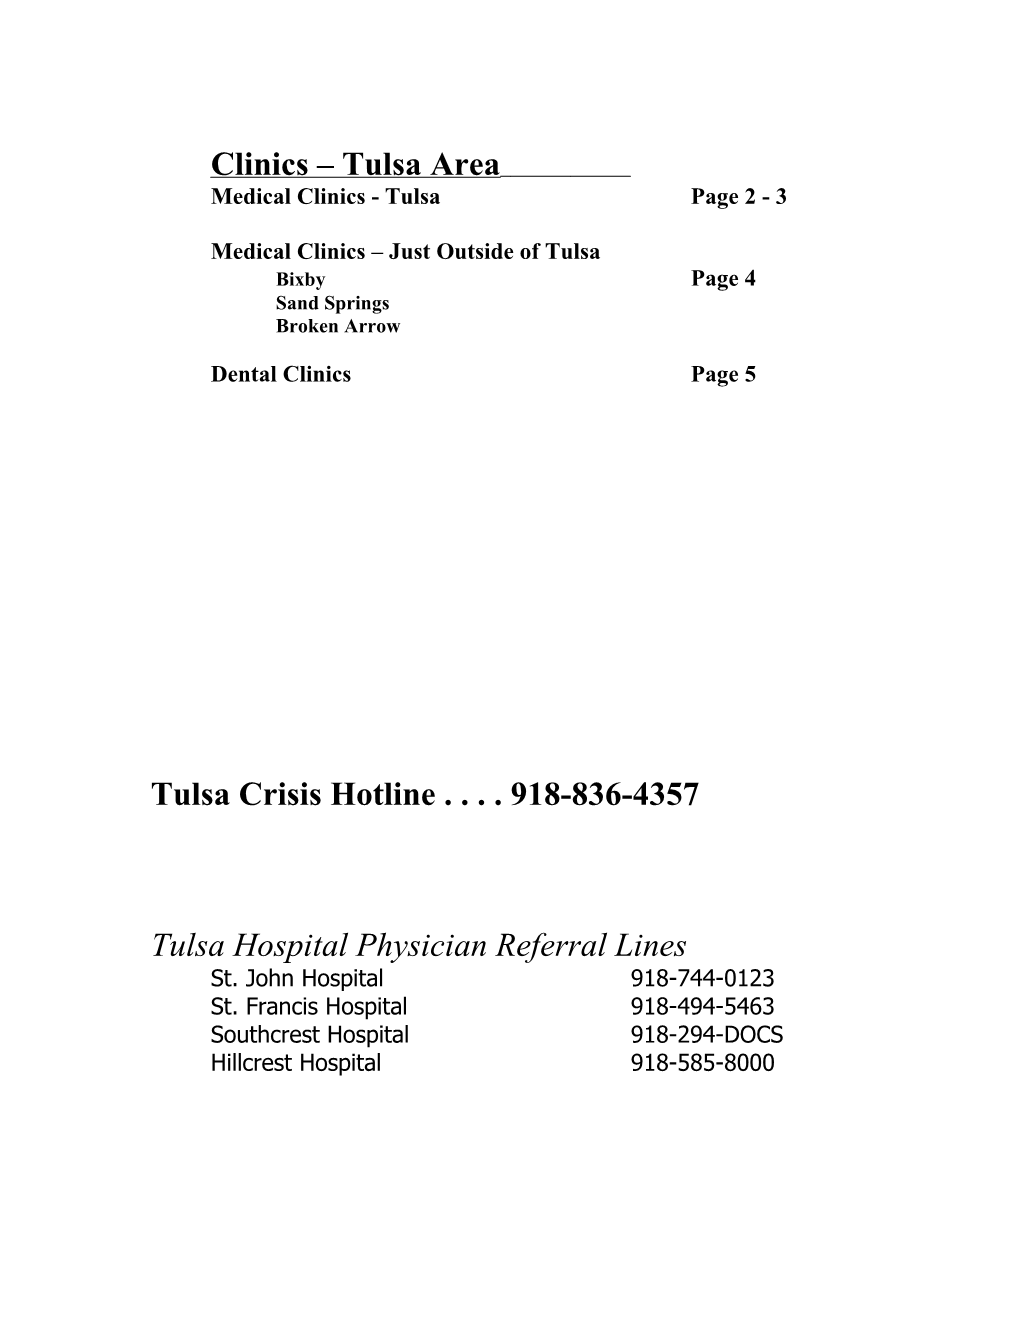 2002 Tulsa Free Clinics